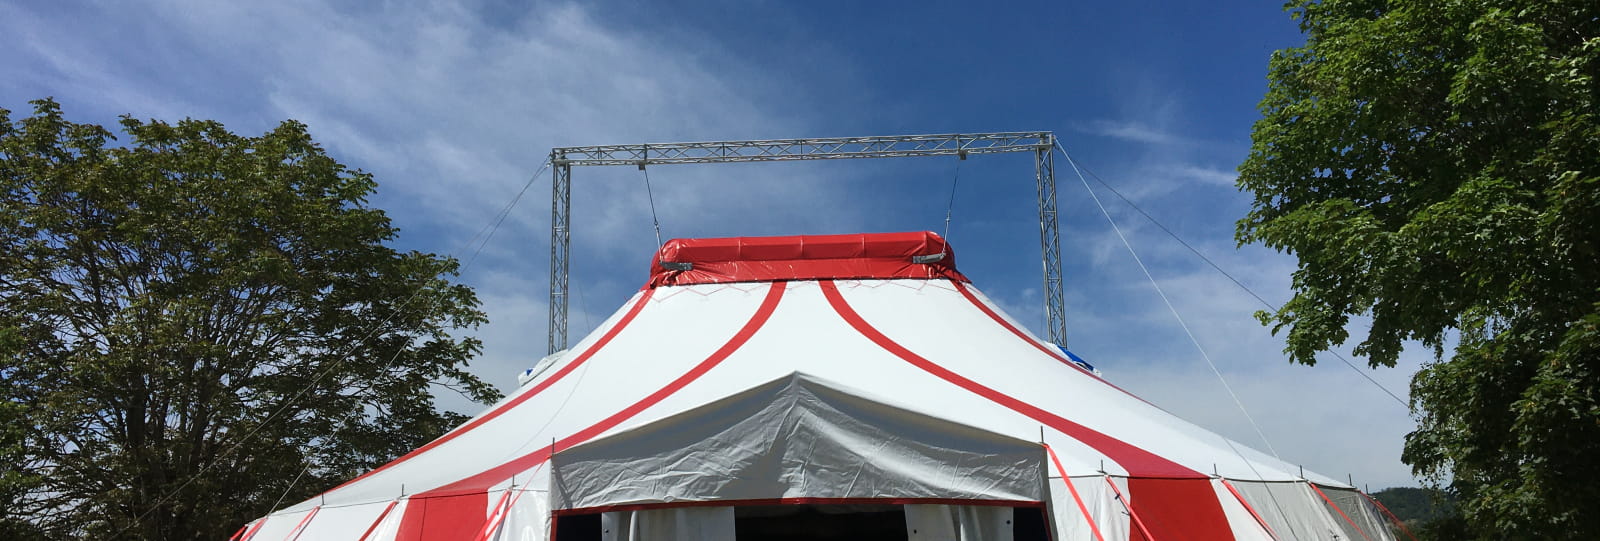 Dauphicirque (circus workshops)